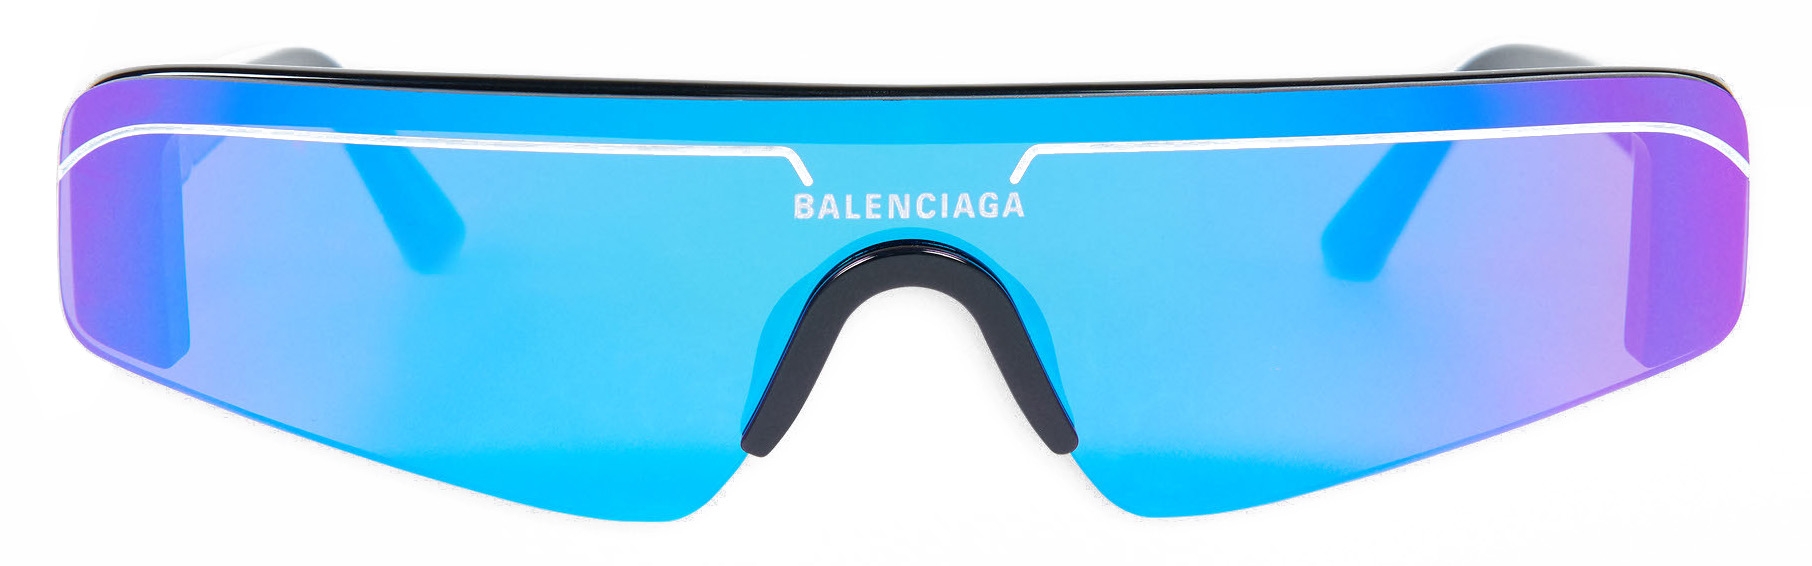 Balenciaga - Ski Cat Sunglasses - Black Blue - Sunglasses